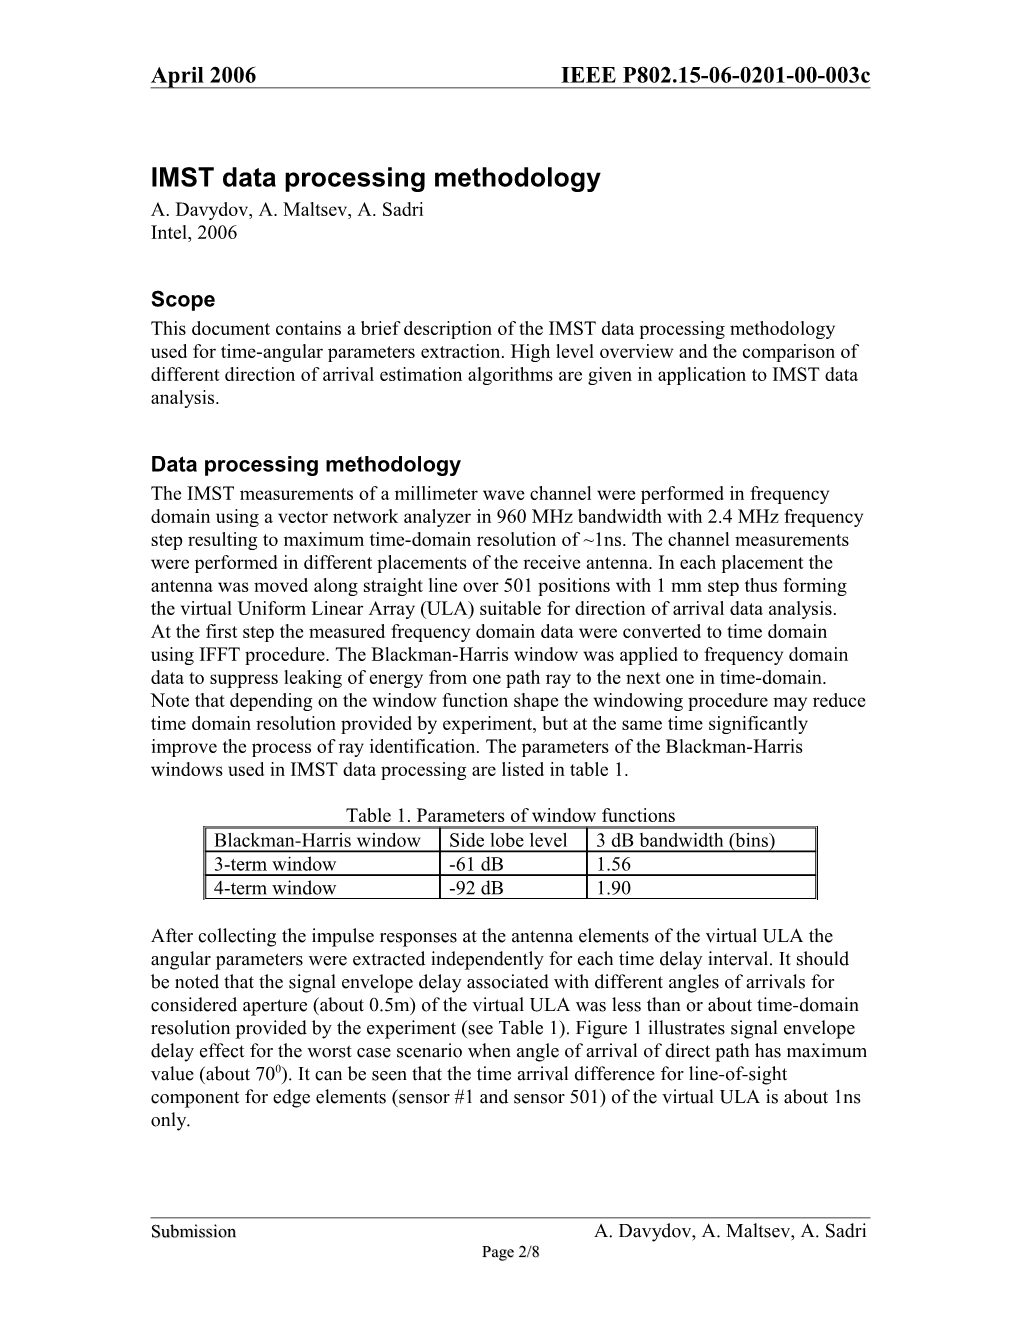 IMST Data Processing Methodology